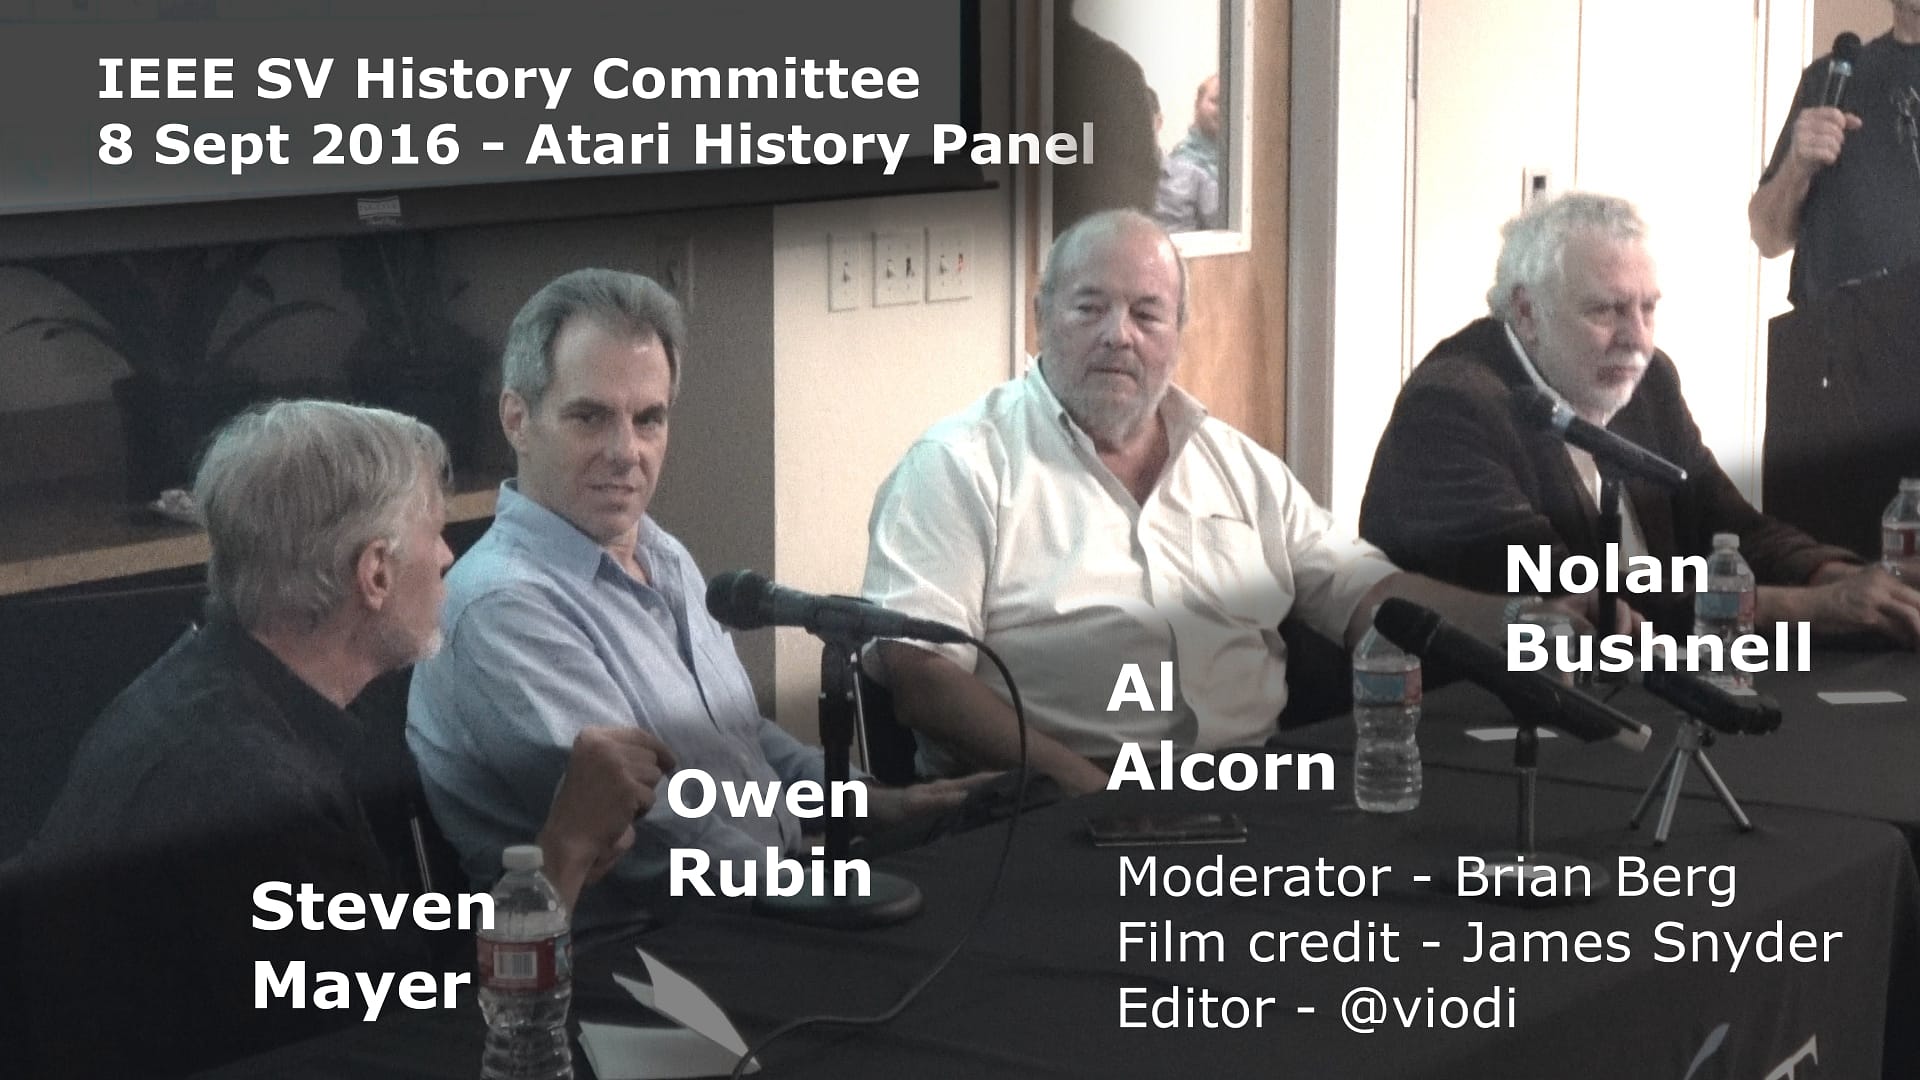 Speakers at the IEEE SV History panel on Atari.